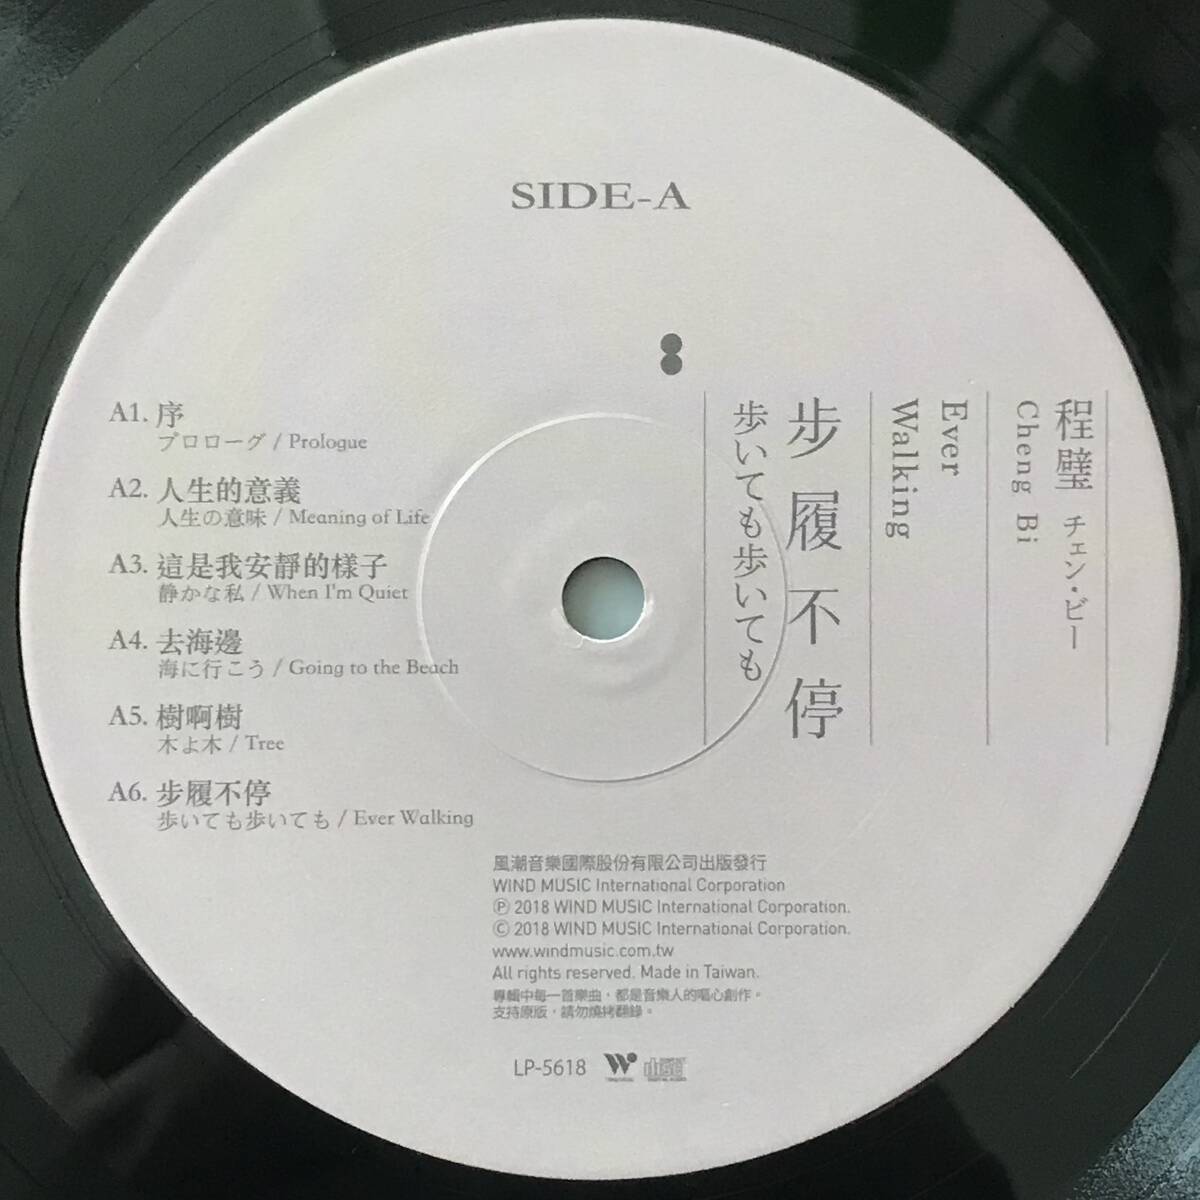 [ mega rare ]Cheng BI / Ever Walking(LP) degree ... un- .. mono peace mono peace thing Suzuki . one . City pop la tubifex low citypop lightmellow